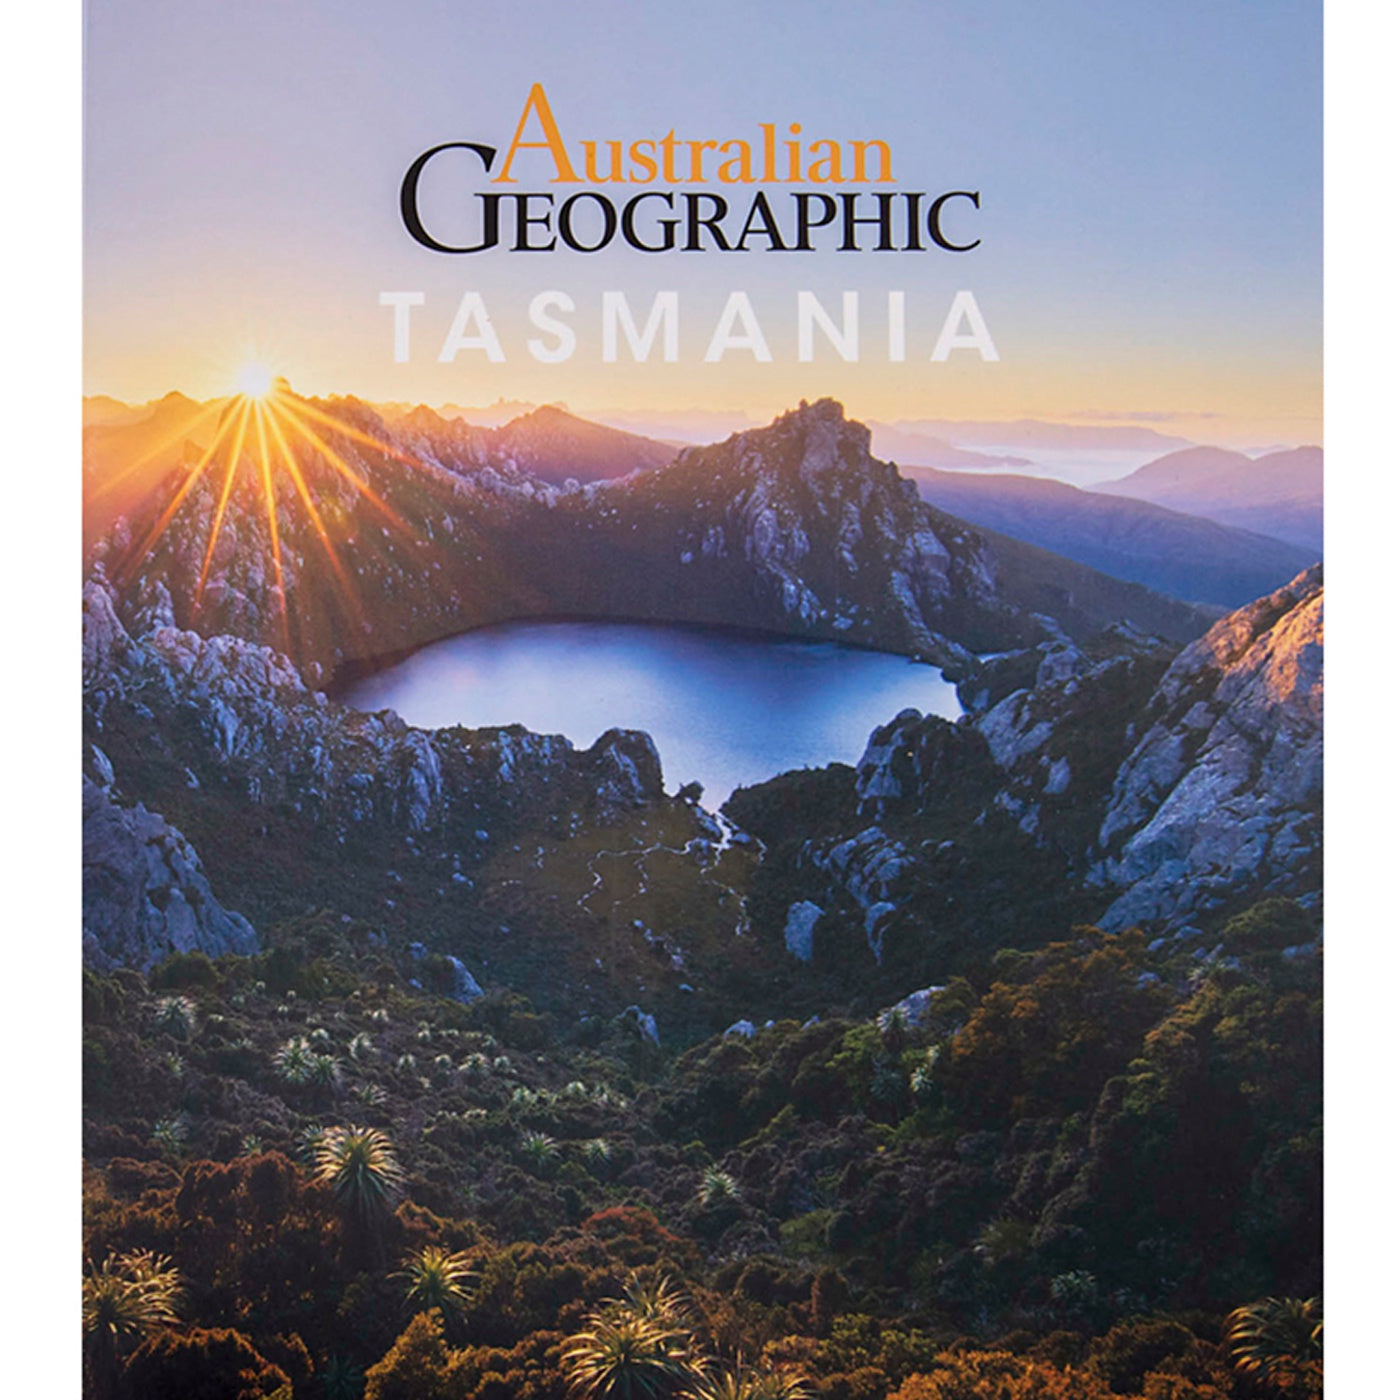 Australian Geographic - Tasmania